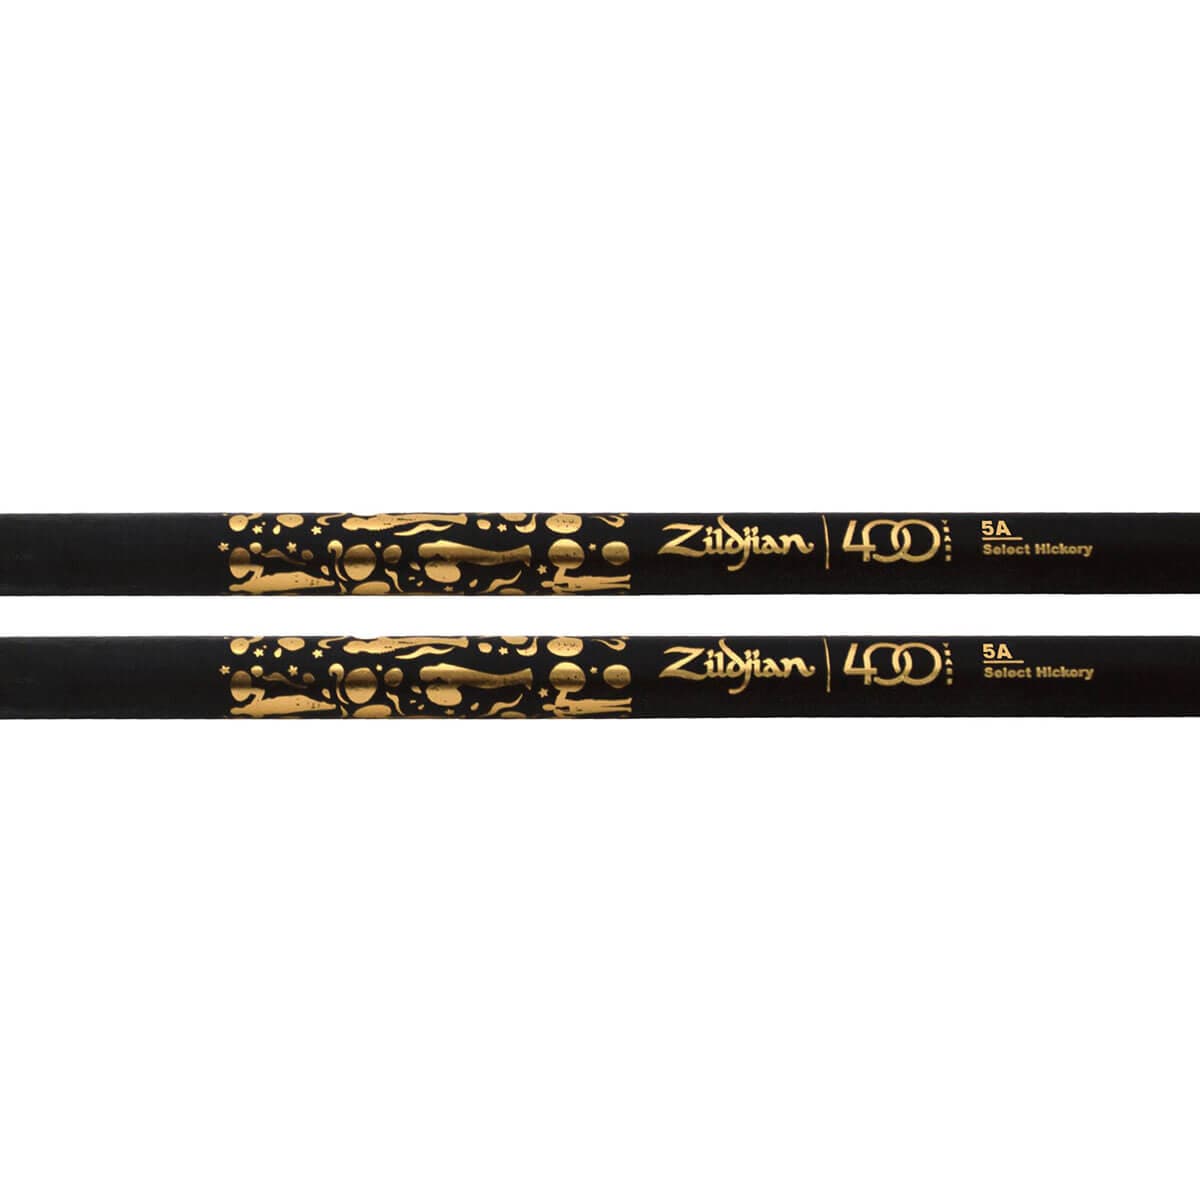 Zildjian Limited Edition 400th Anniversary Drum Sticks 5A Nylon Dip